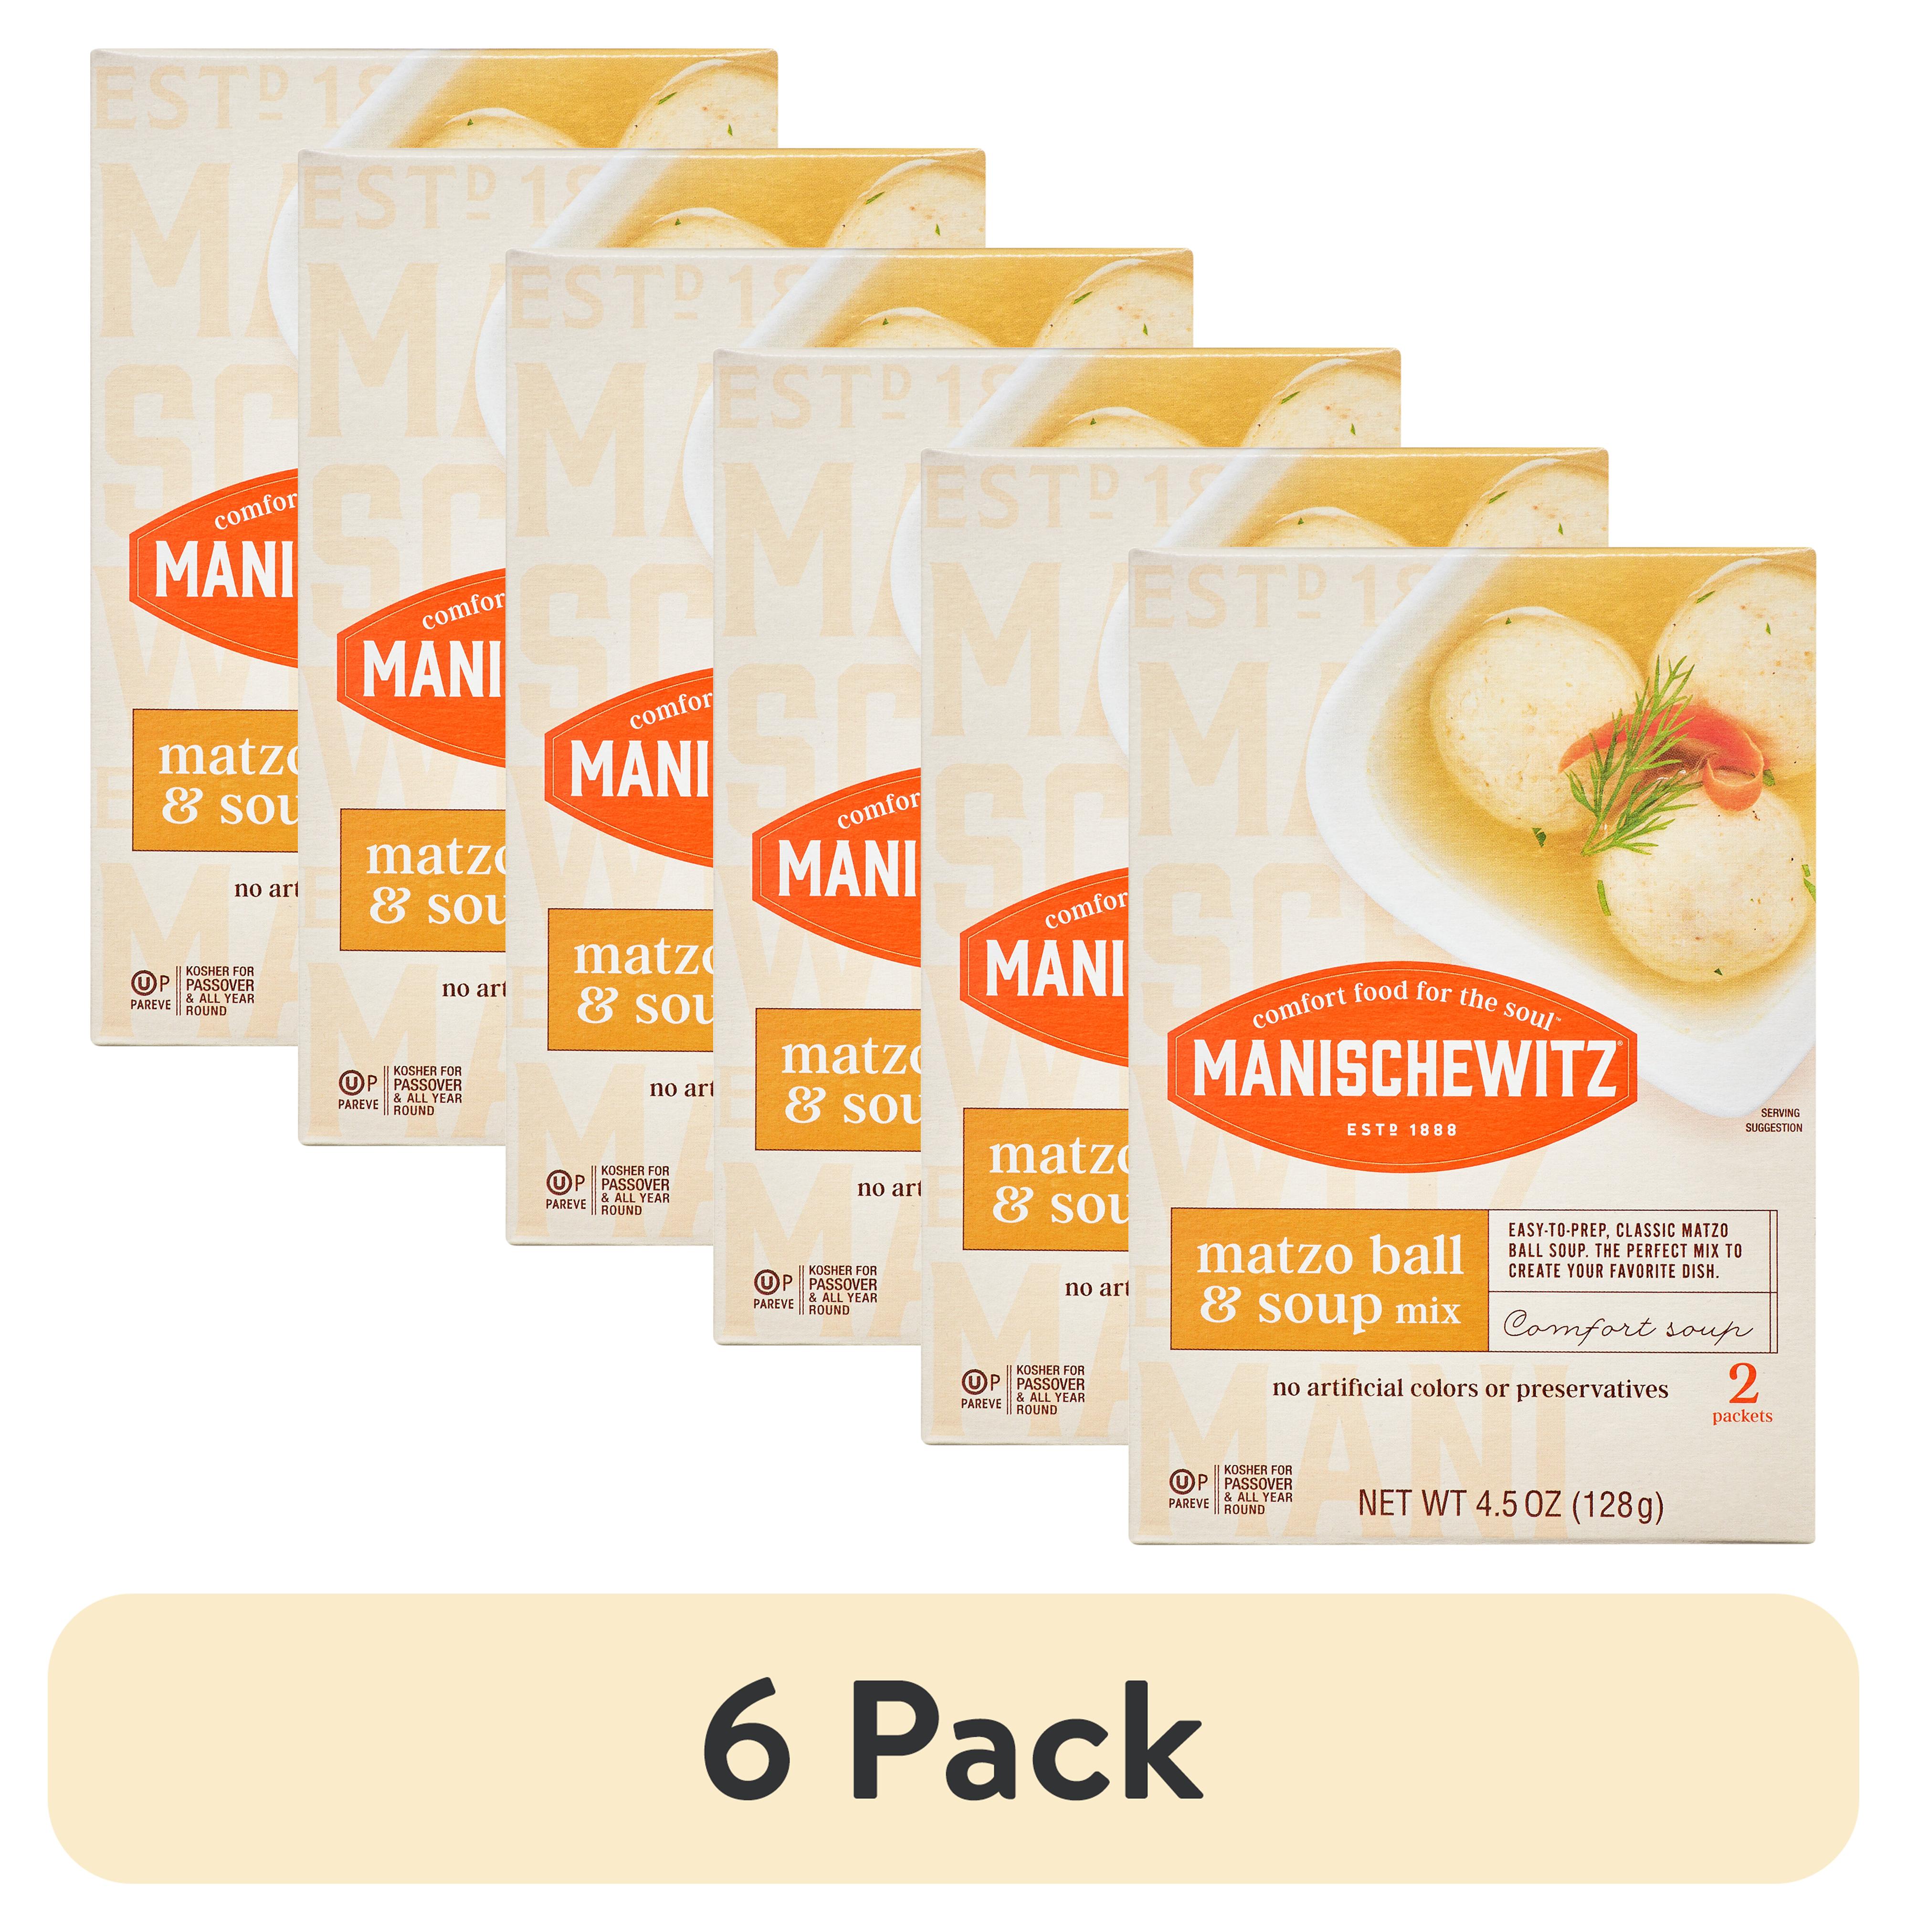 (6 pack) Manischewitz Matzo Ball and Soup Mix - 4.5 oz. - image 1 of 7